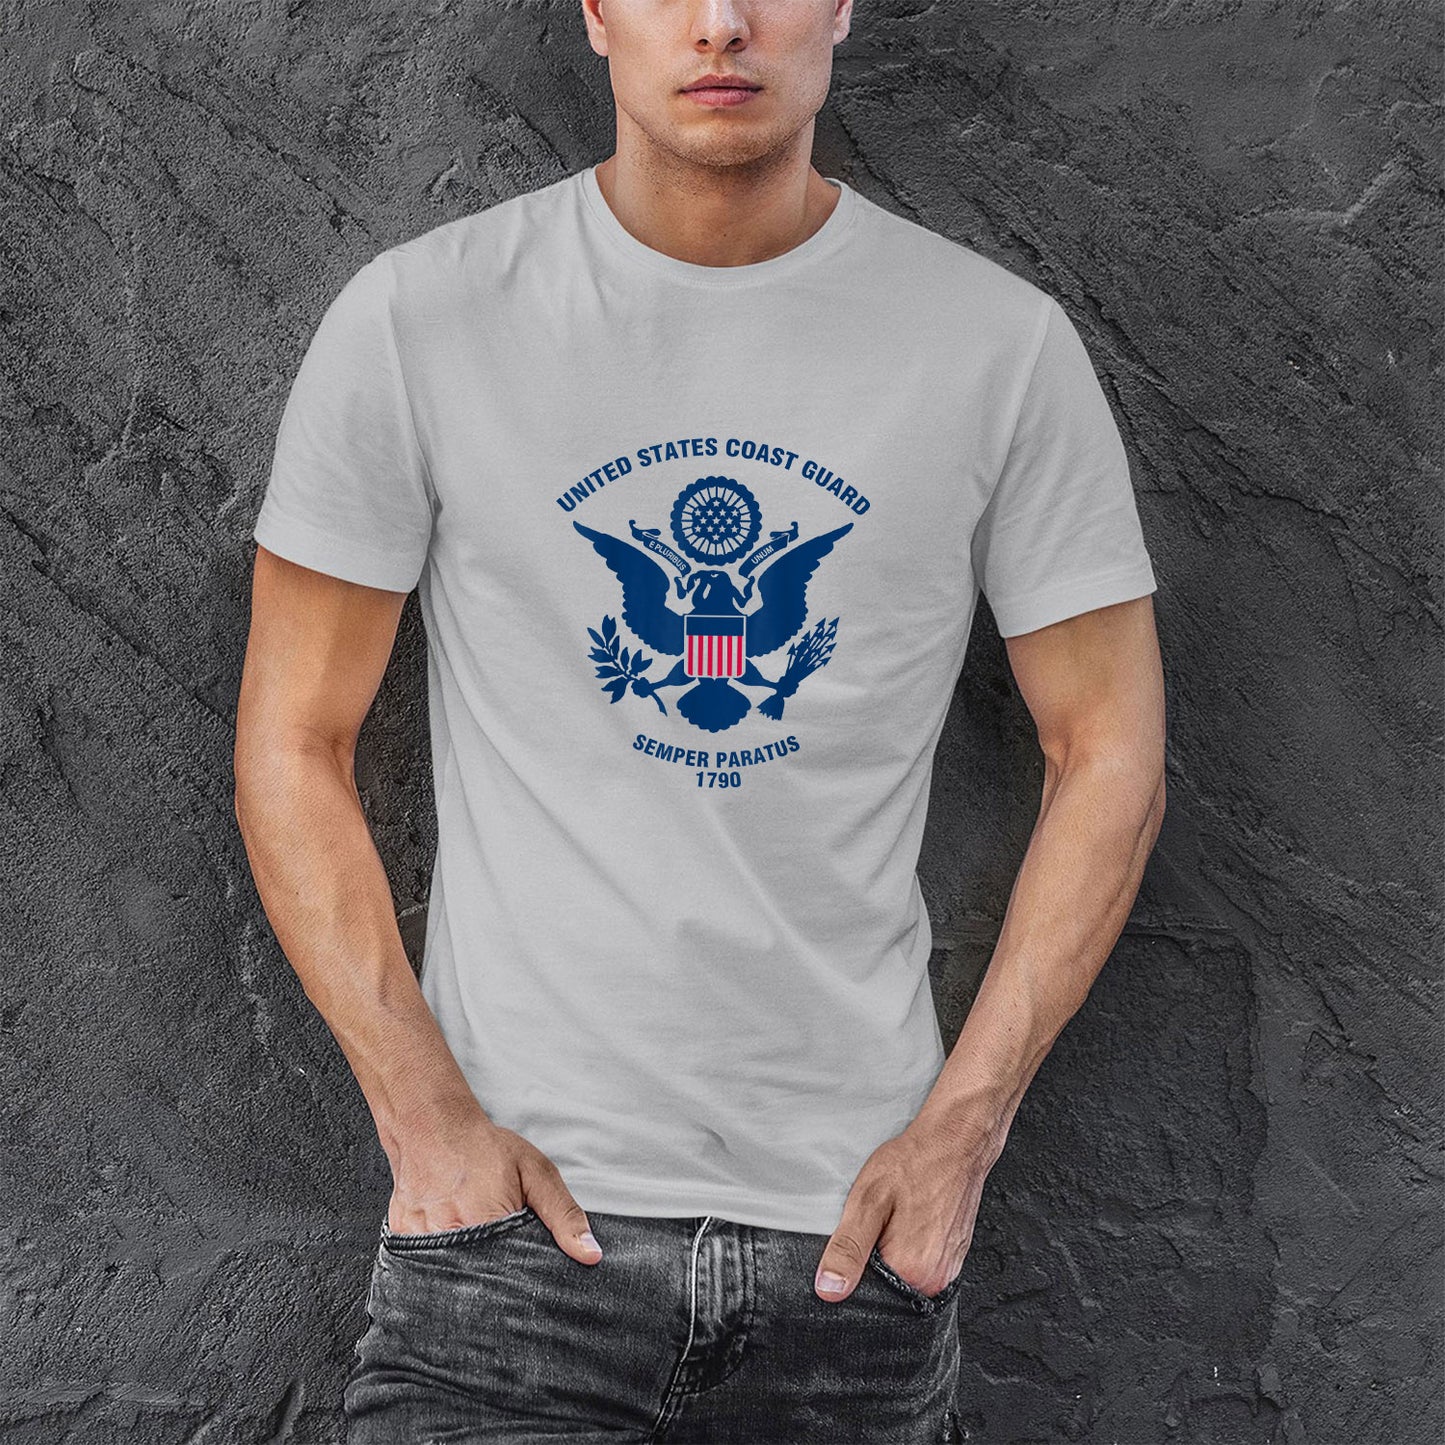 Memorial Day 2021 Uscg Tee Shirts, United States Coast Guard T Shirt  USCG Shirt For Men, Cotton Shirt, Air Force Memorial Shirt, Usaf T Shirt